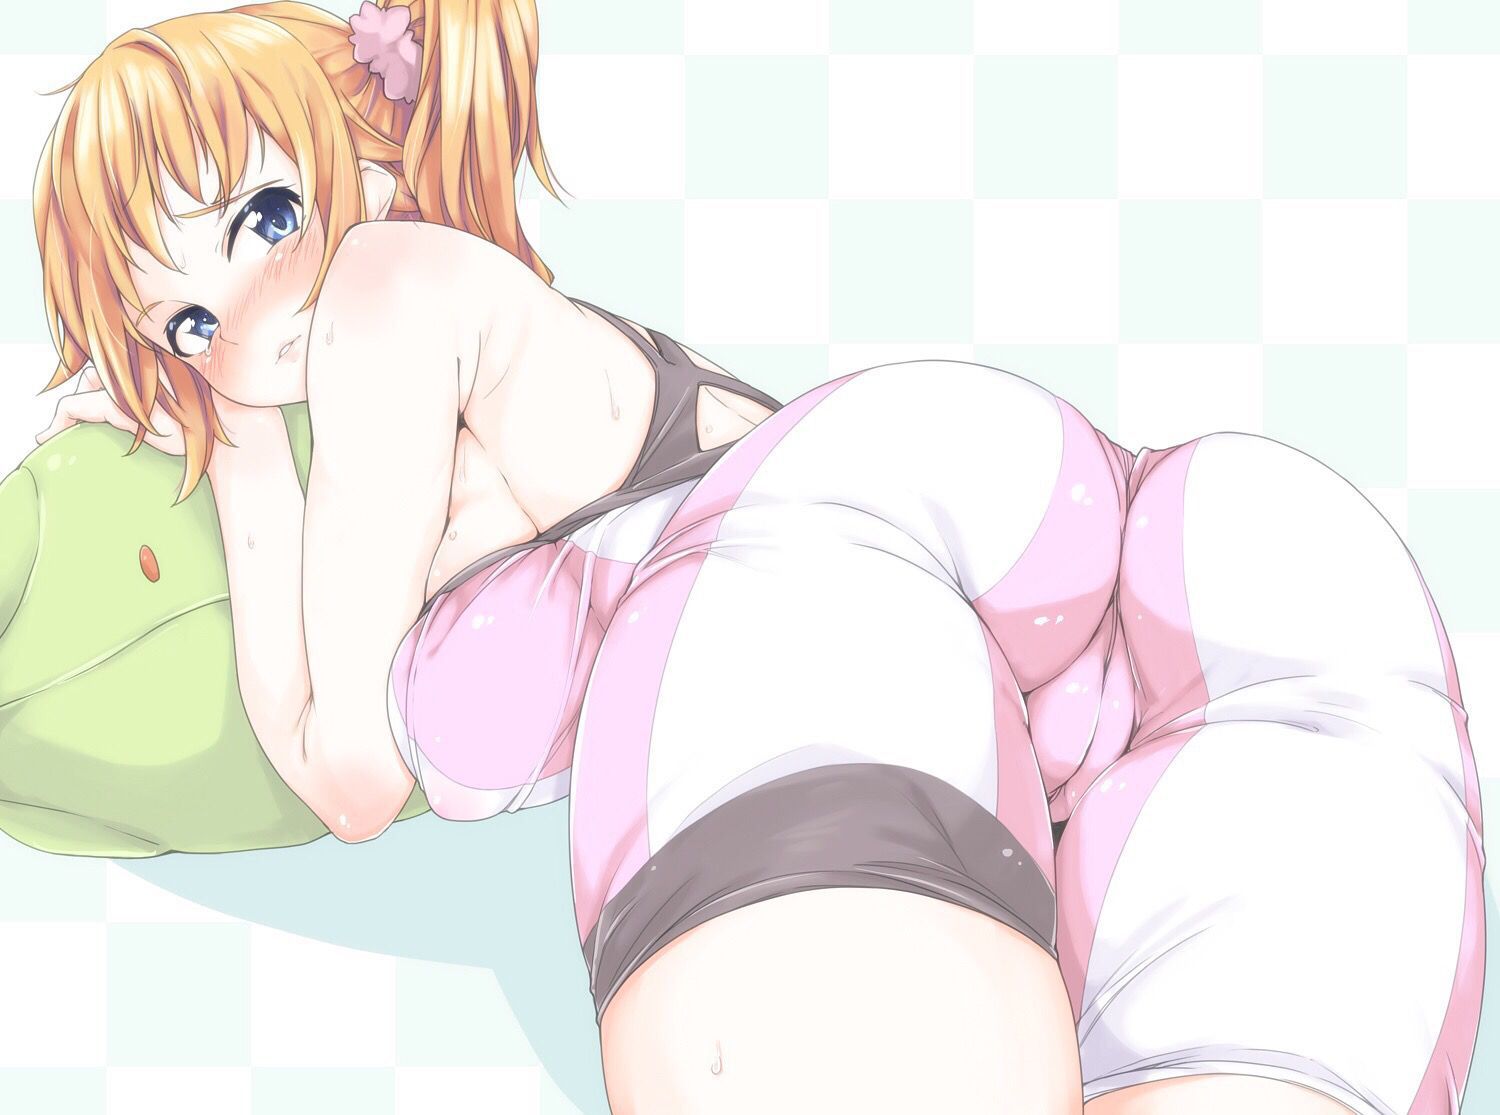 Today's Saku is a random secondary erotic image! Part 4 15